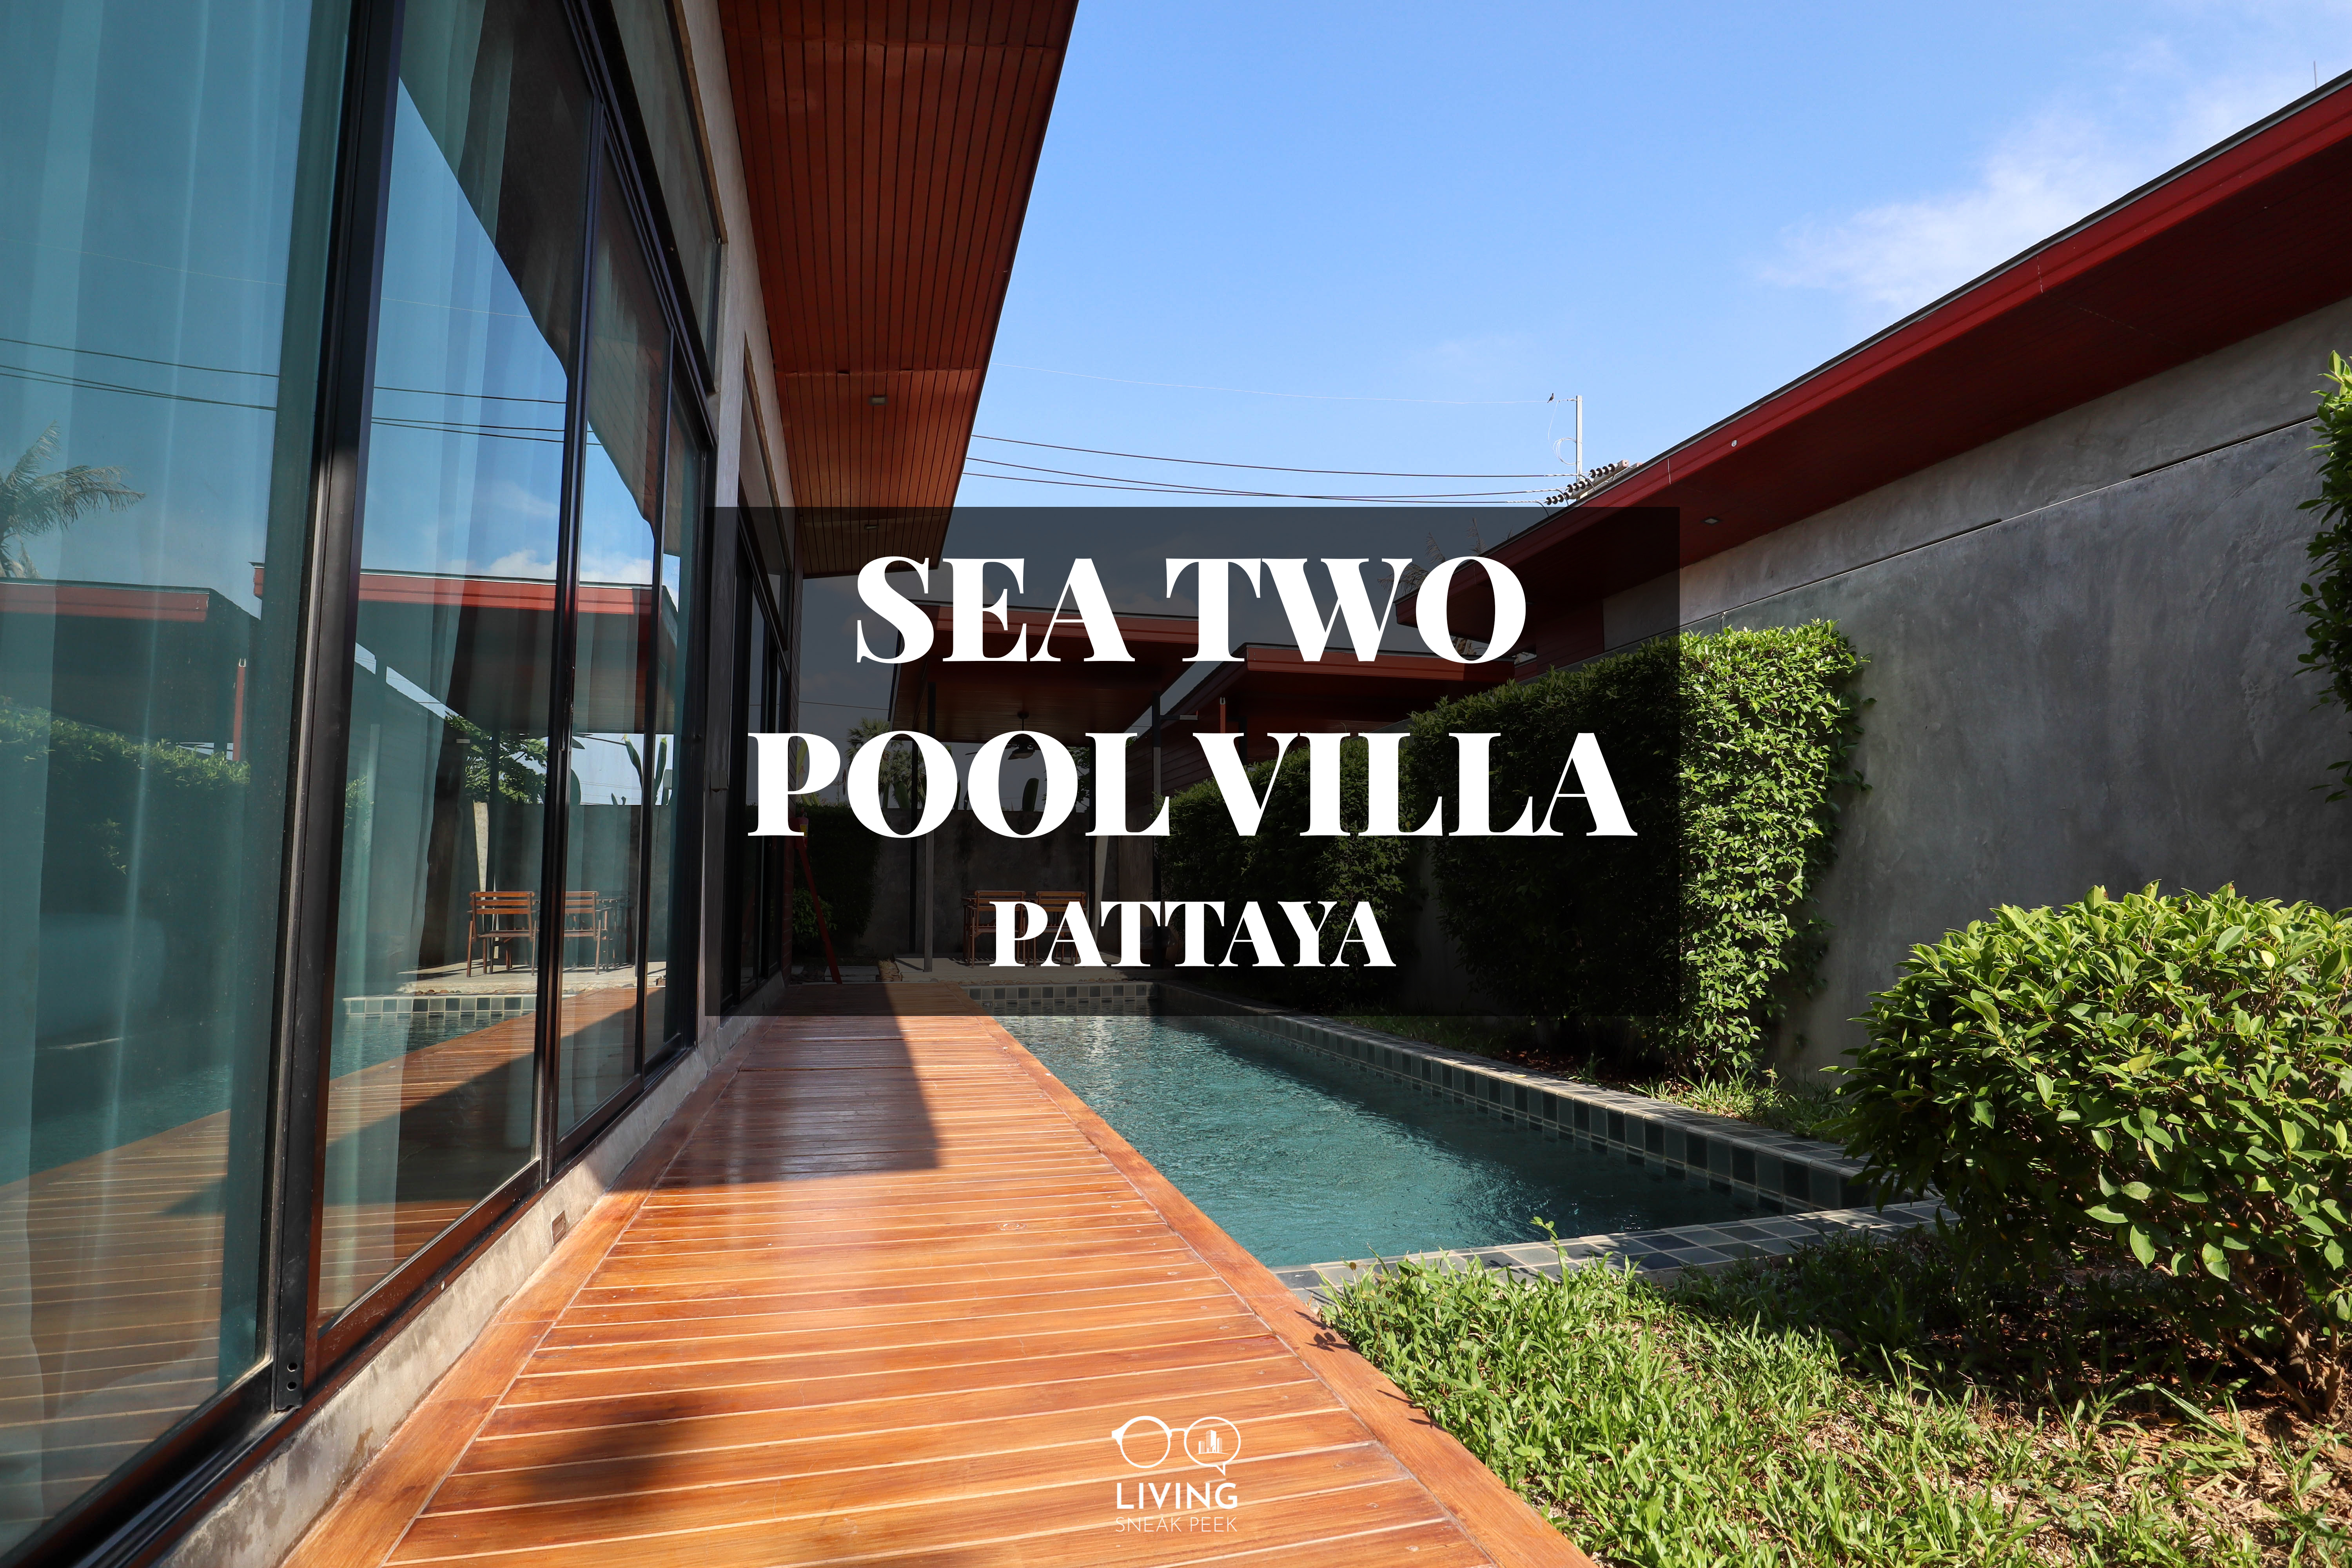 Sea Two Pool Villa @ Pattaya